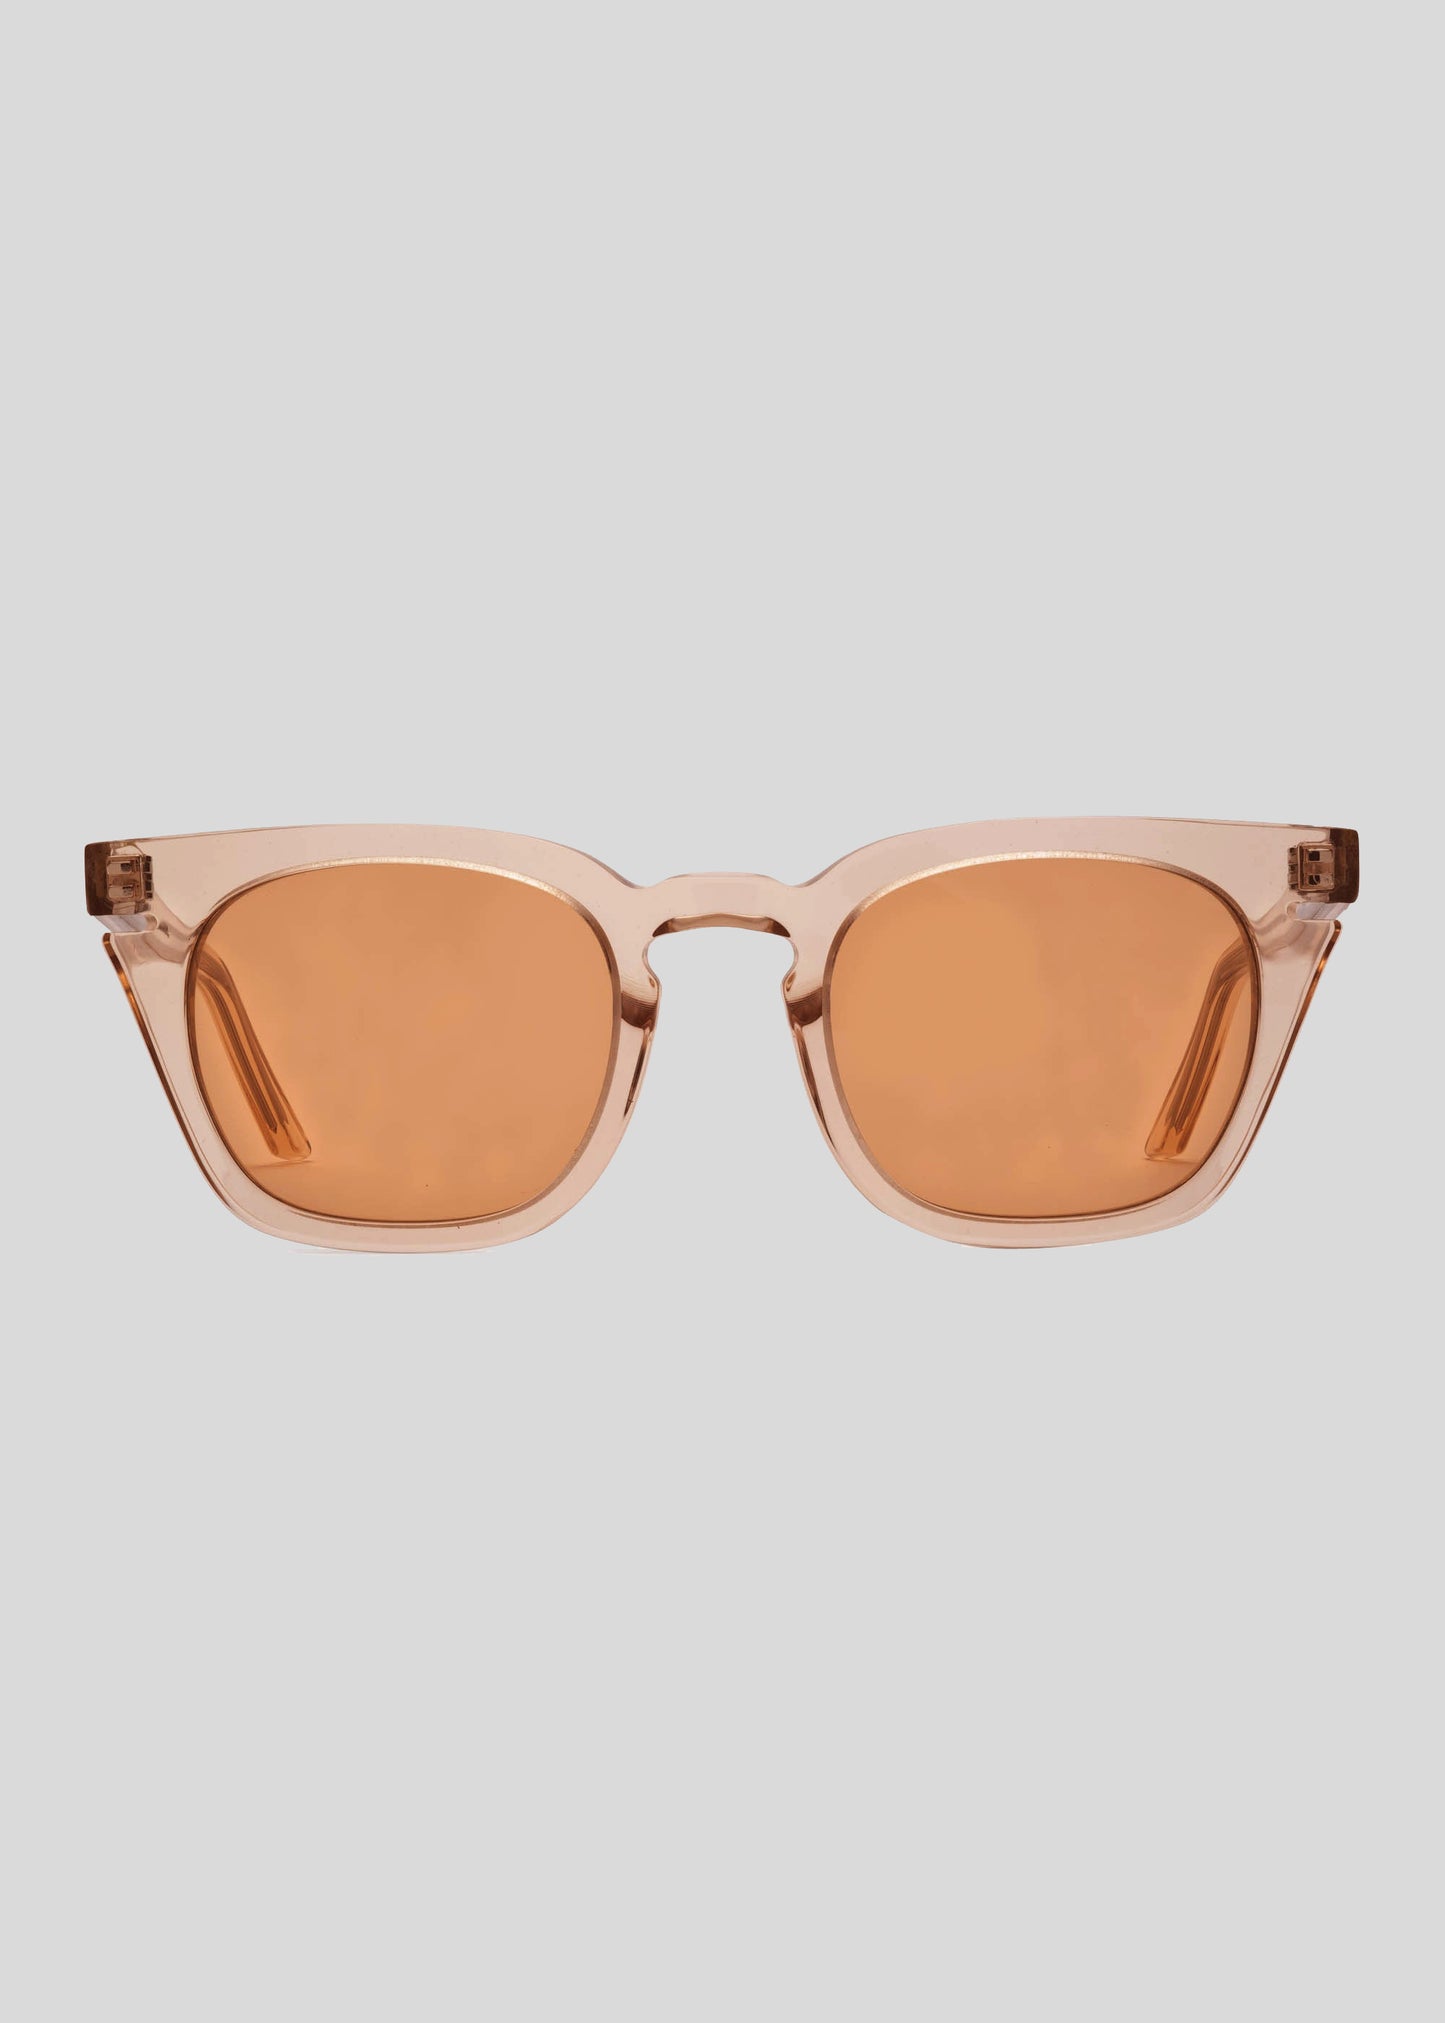 Roseland Peach Sunglasses front